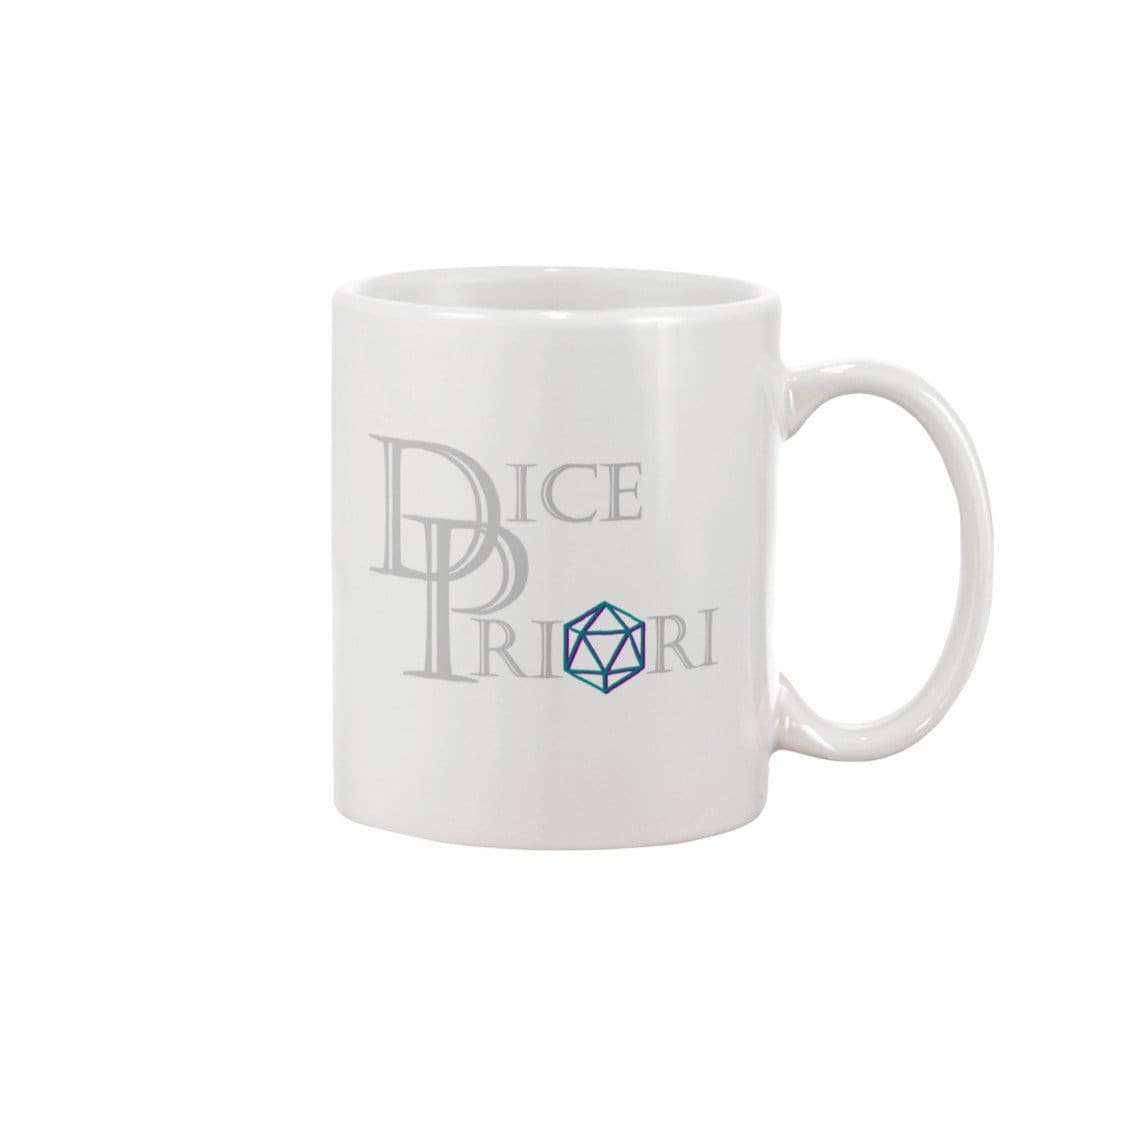 Dice Priori Classic Text Logo 11oz Coffee Mug - Dice Priori